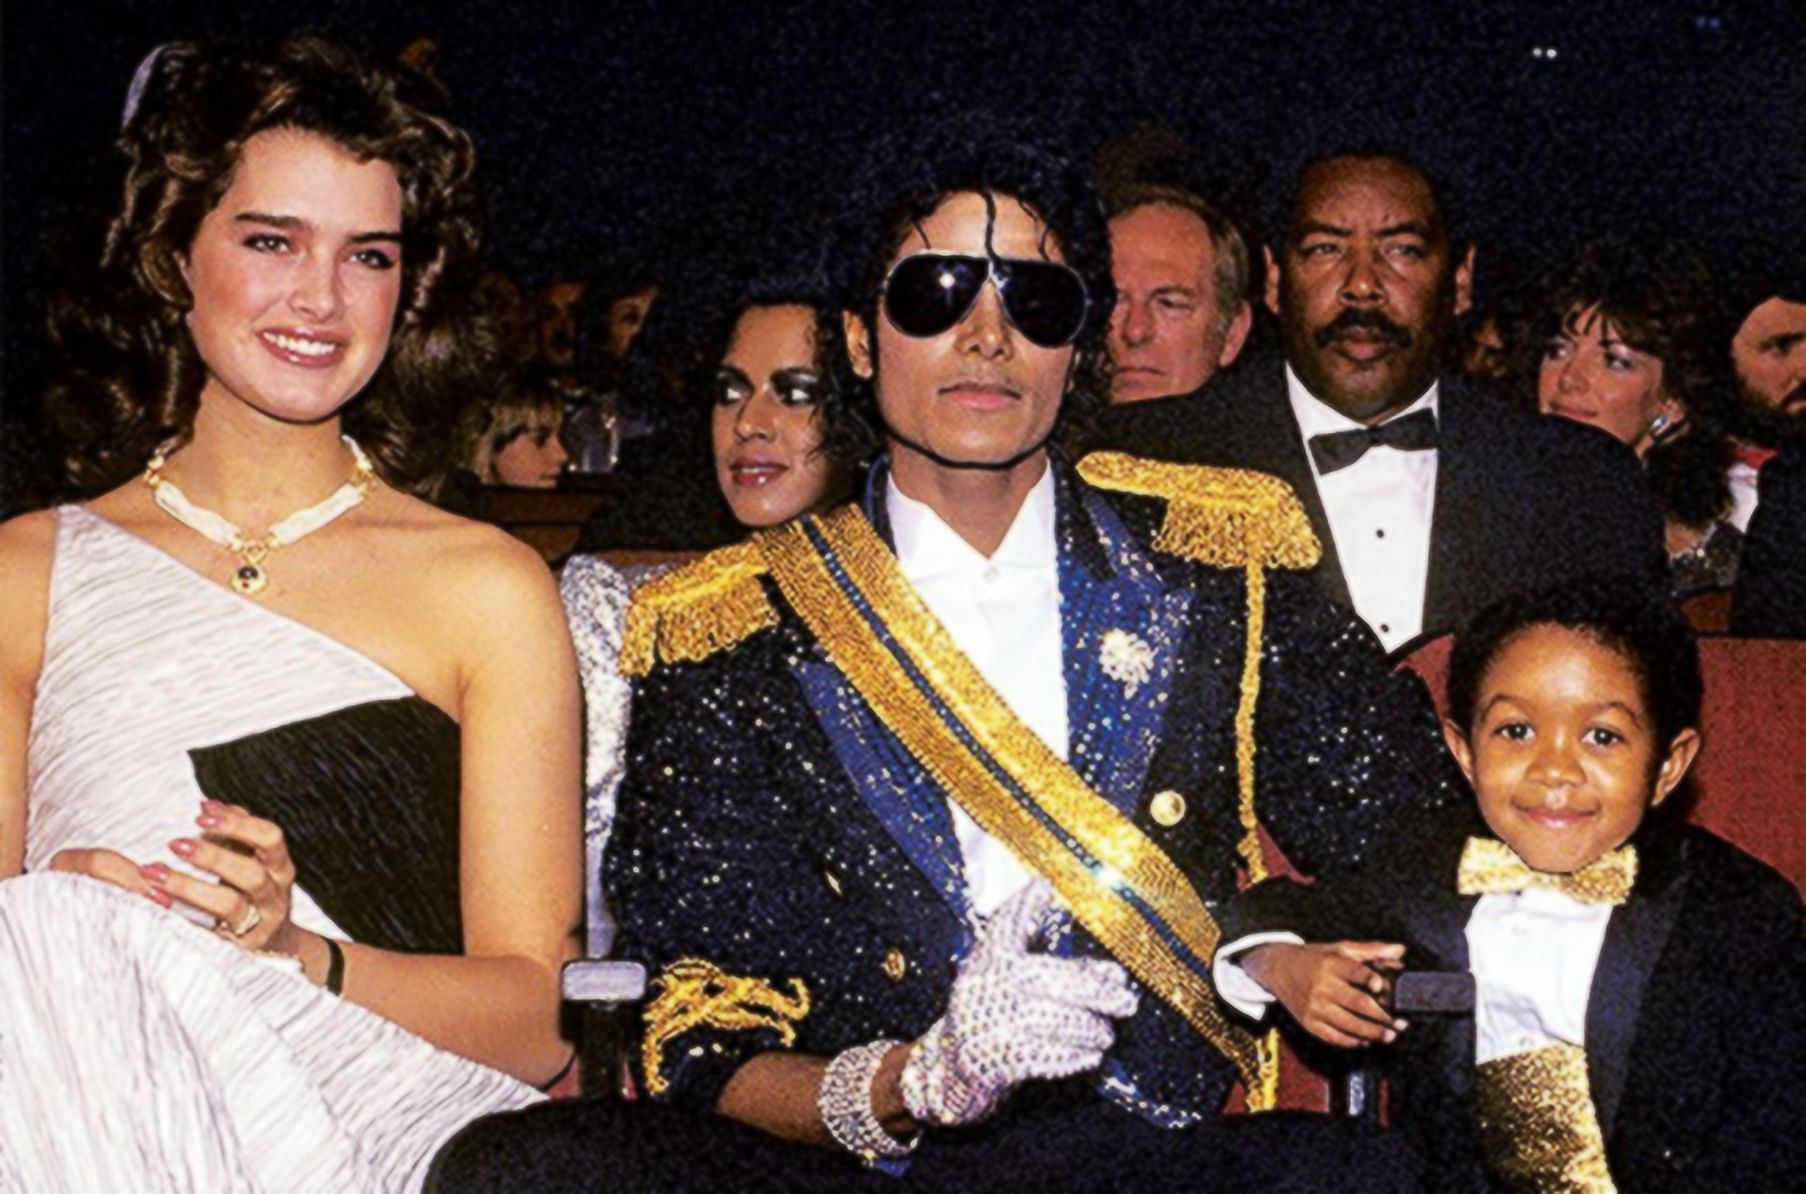 Brooke Shields, Michael Jackson, and Emmanuel Lewis at the 1984 Grammy Awards (Image via Polaris)